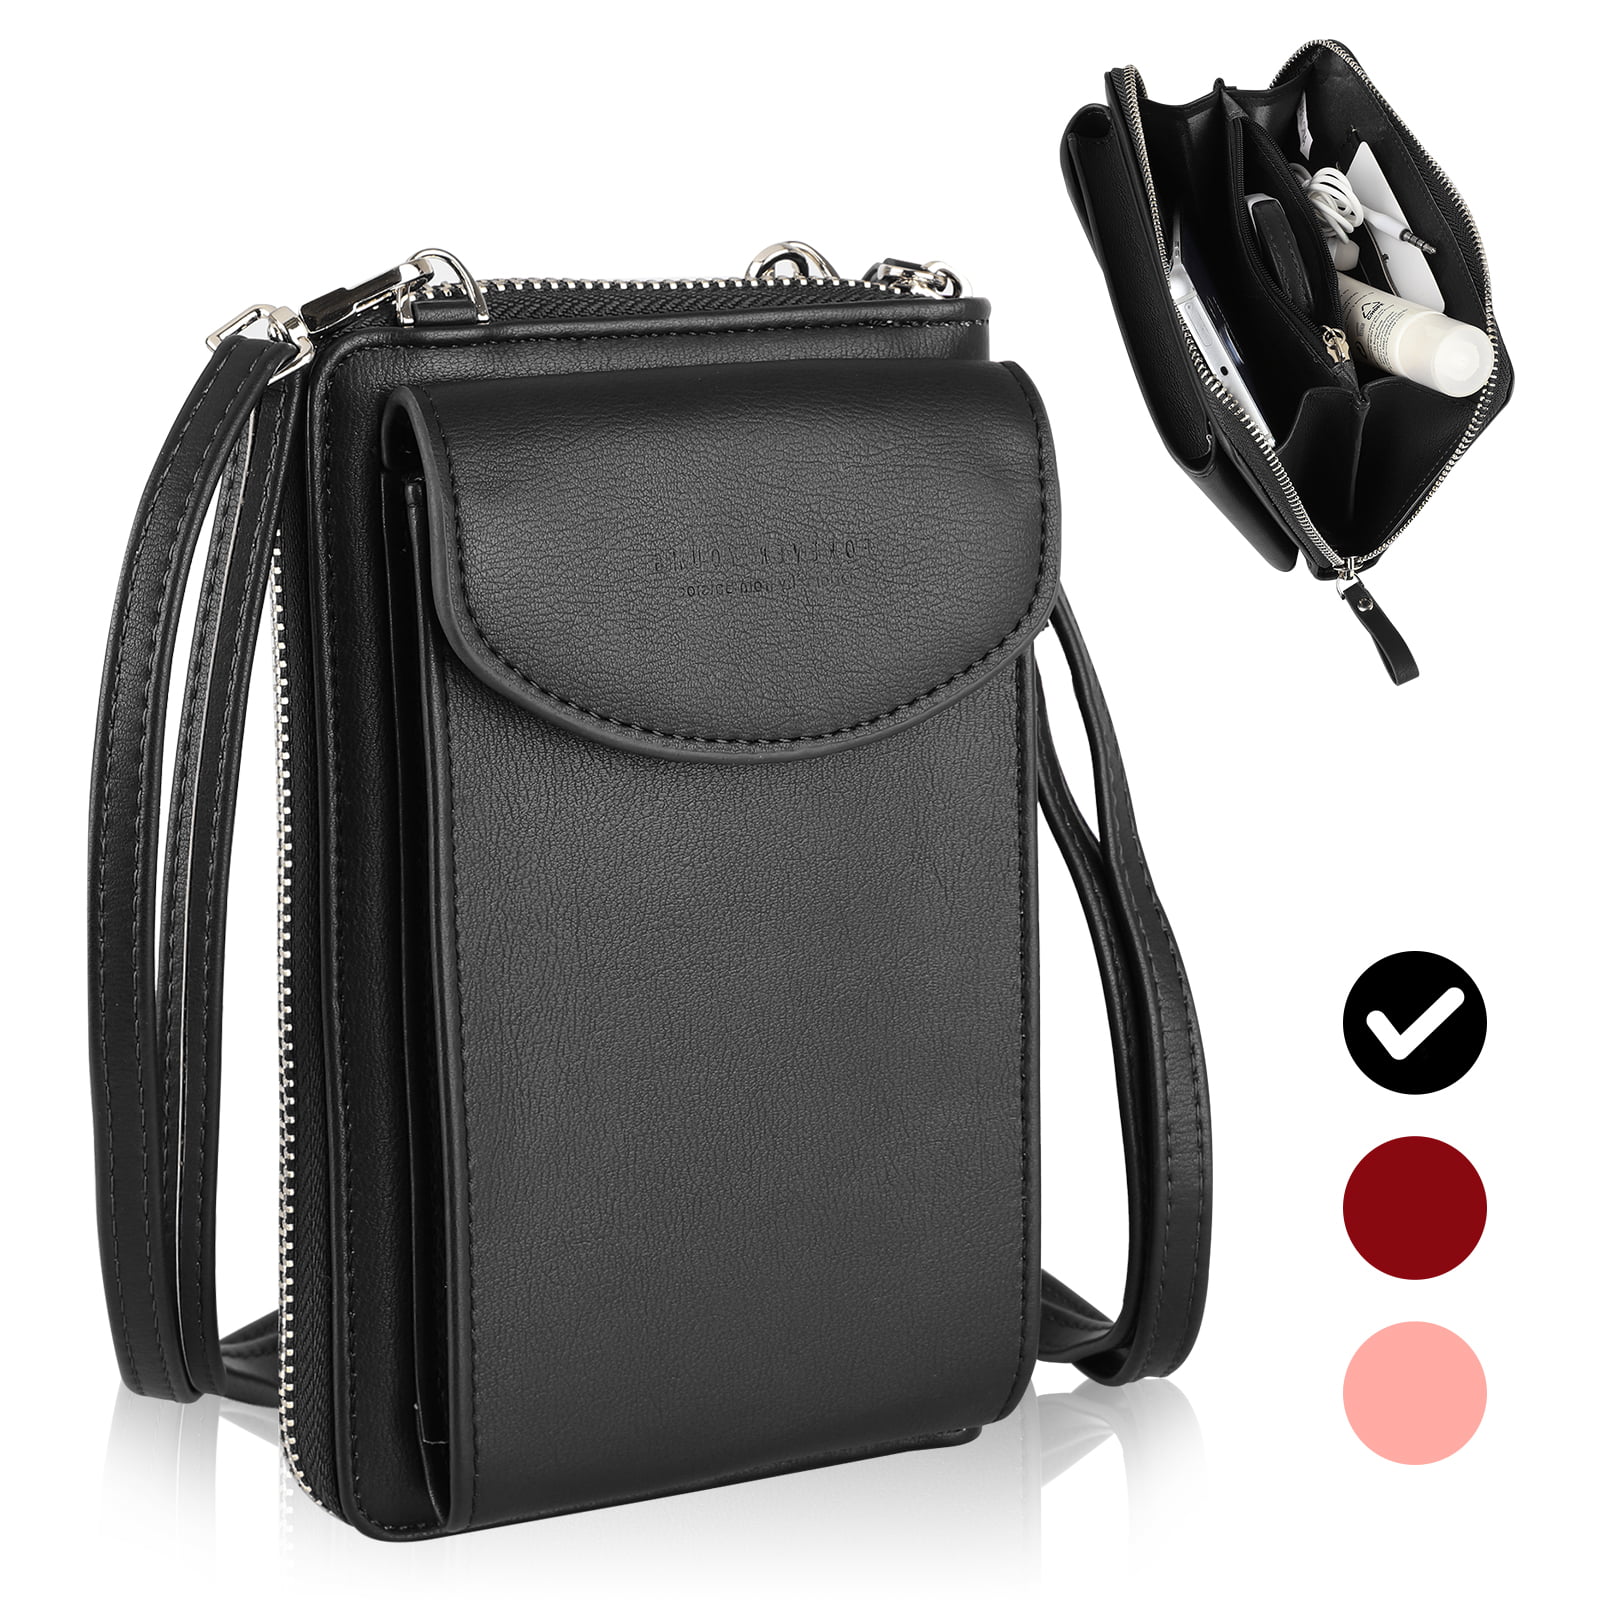 3 in 1 Handbag for Women Small Leather Top Handle Handbag Clutch Crossbody Shoulder Bag Tote Messenger Bag Cell Phone Mini Backpack Purse Wallet and Satchel Black